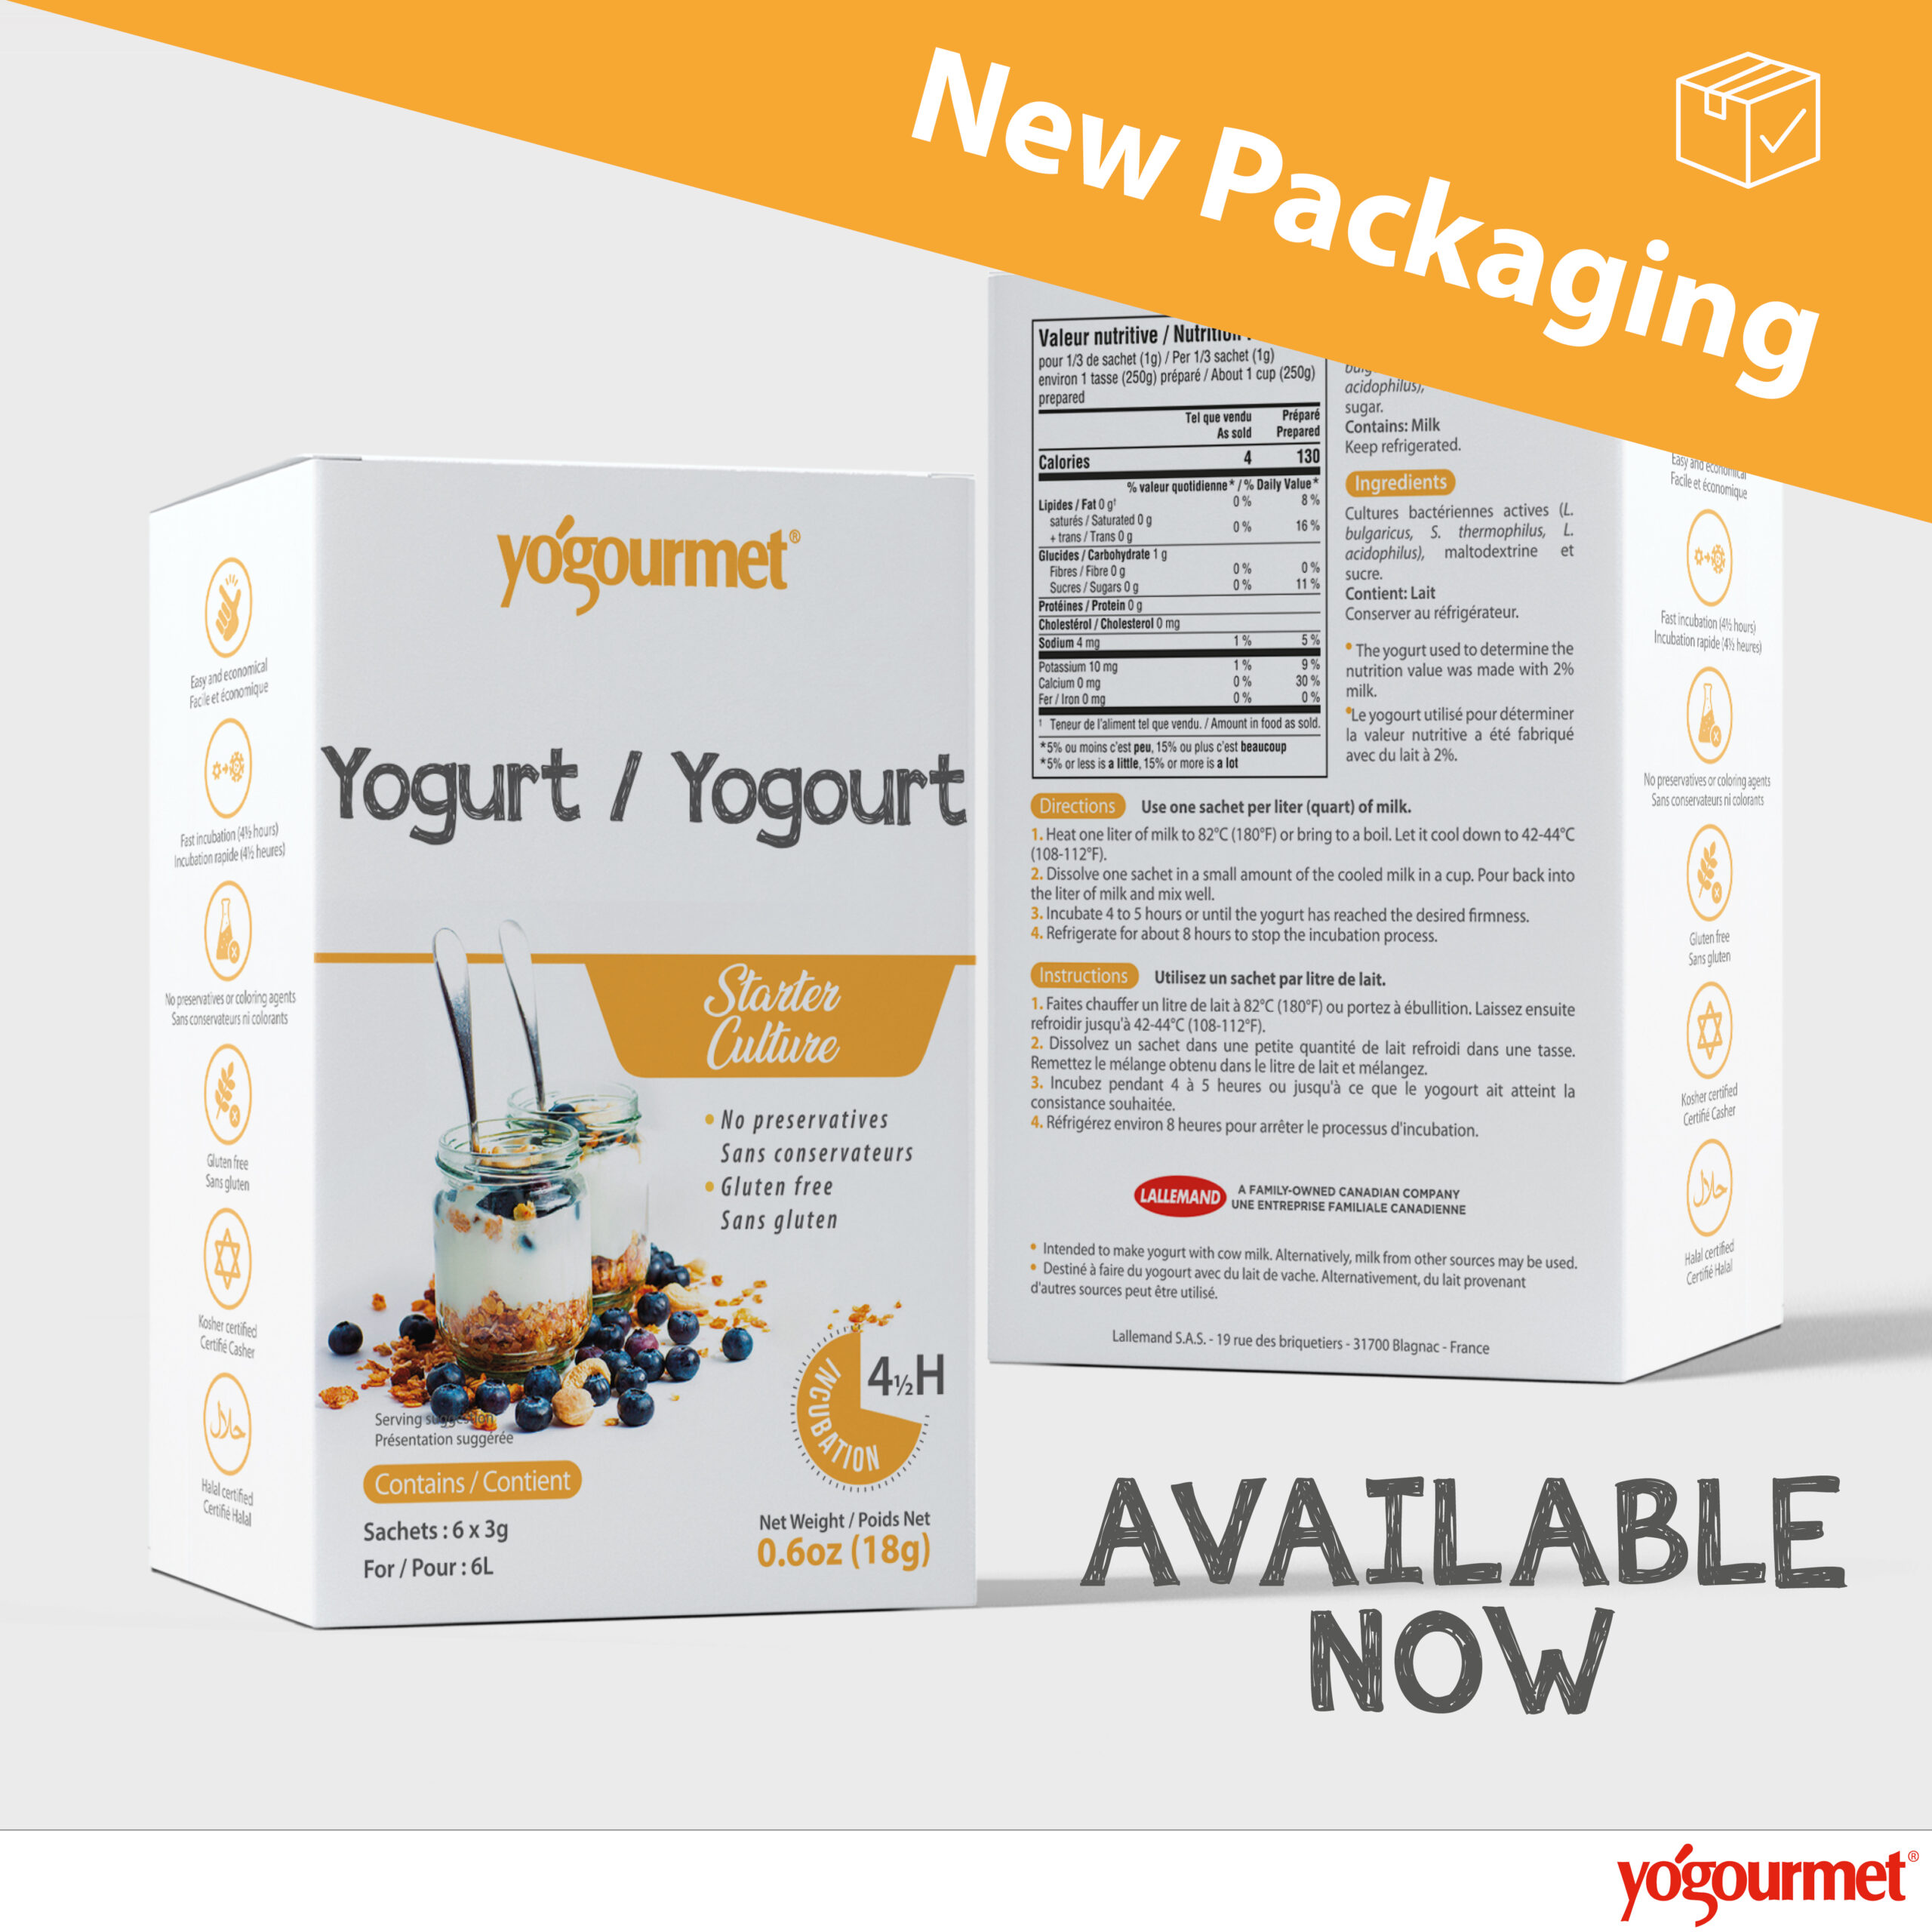 New packaging for Yogourmet®!